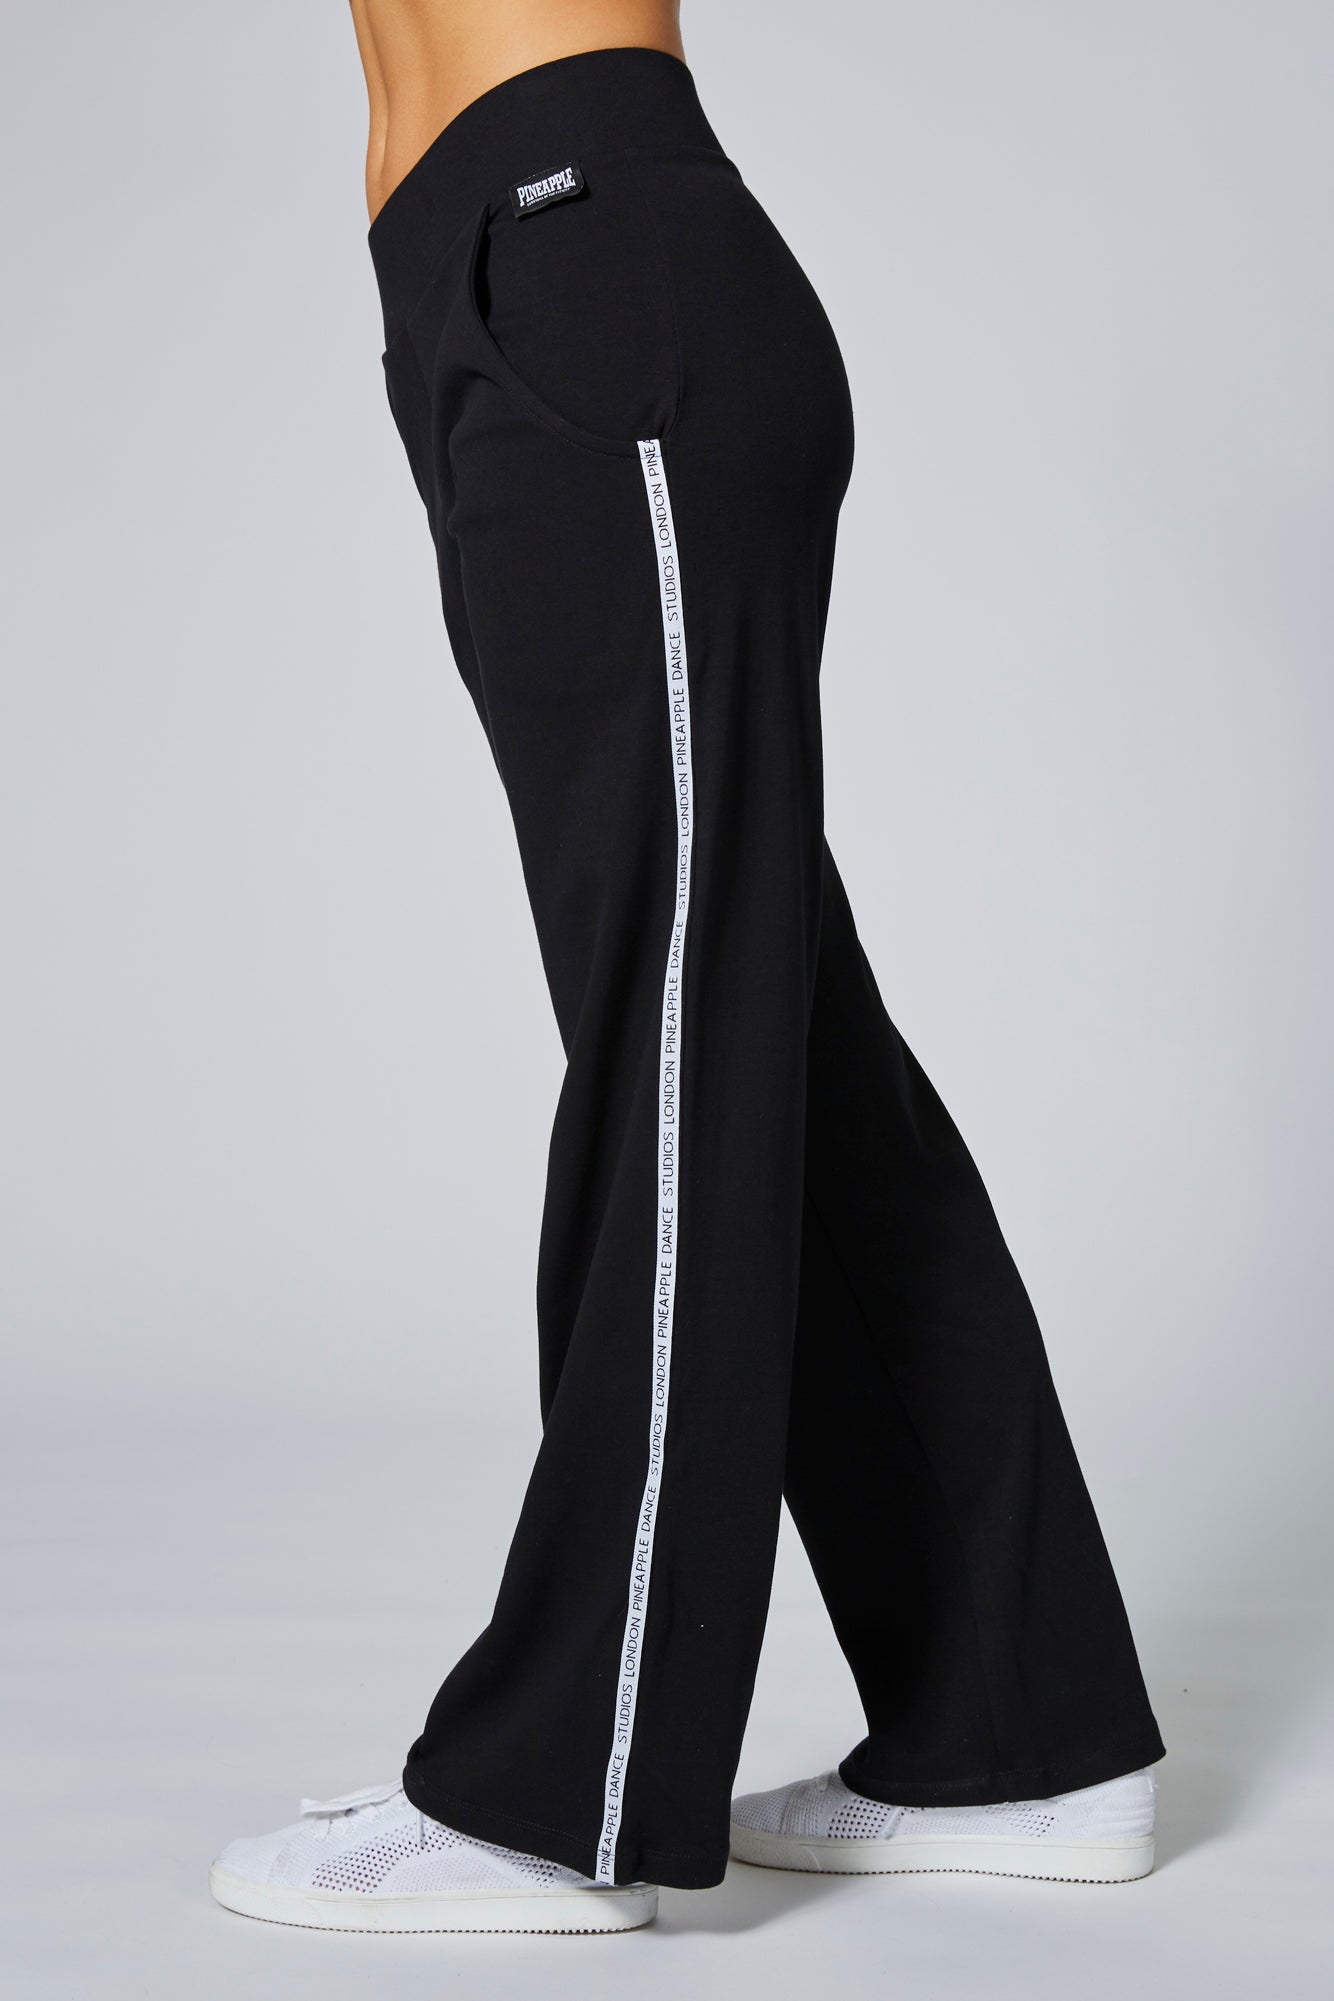 Stylish Black Cotton Blend Striped Track Pants For Women, Yoga